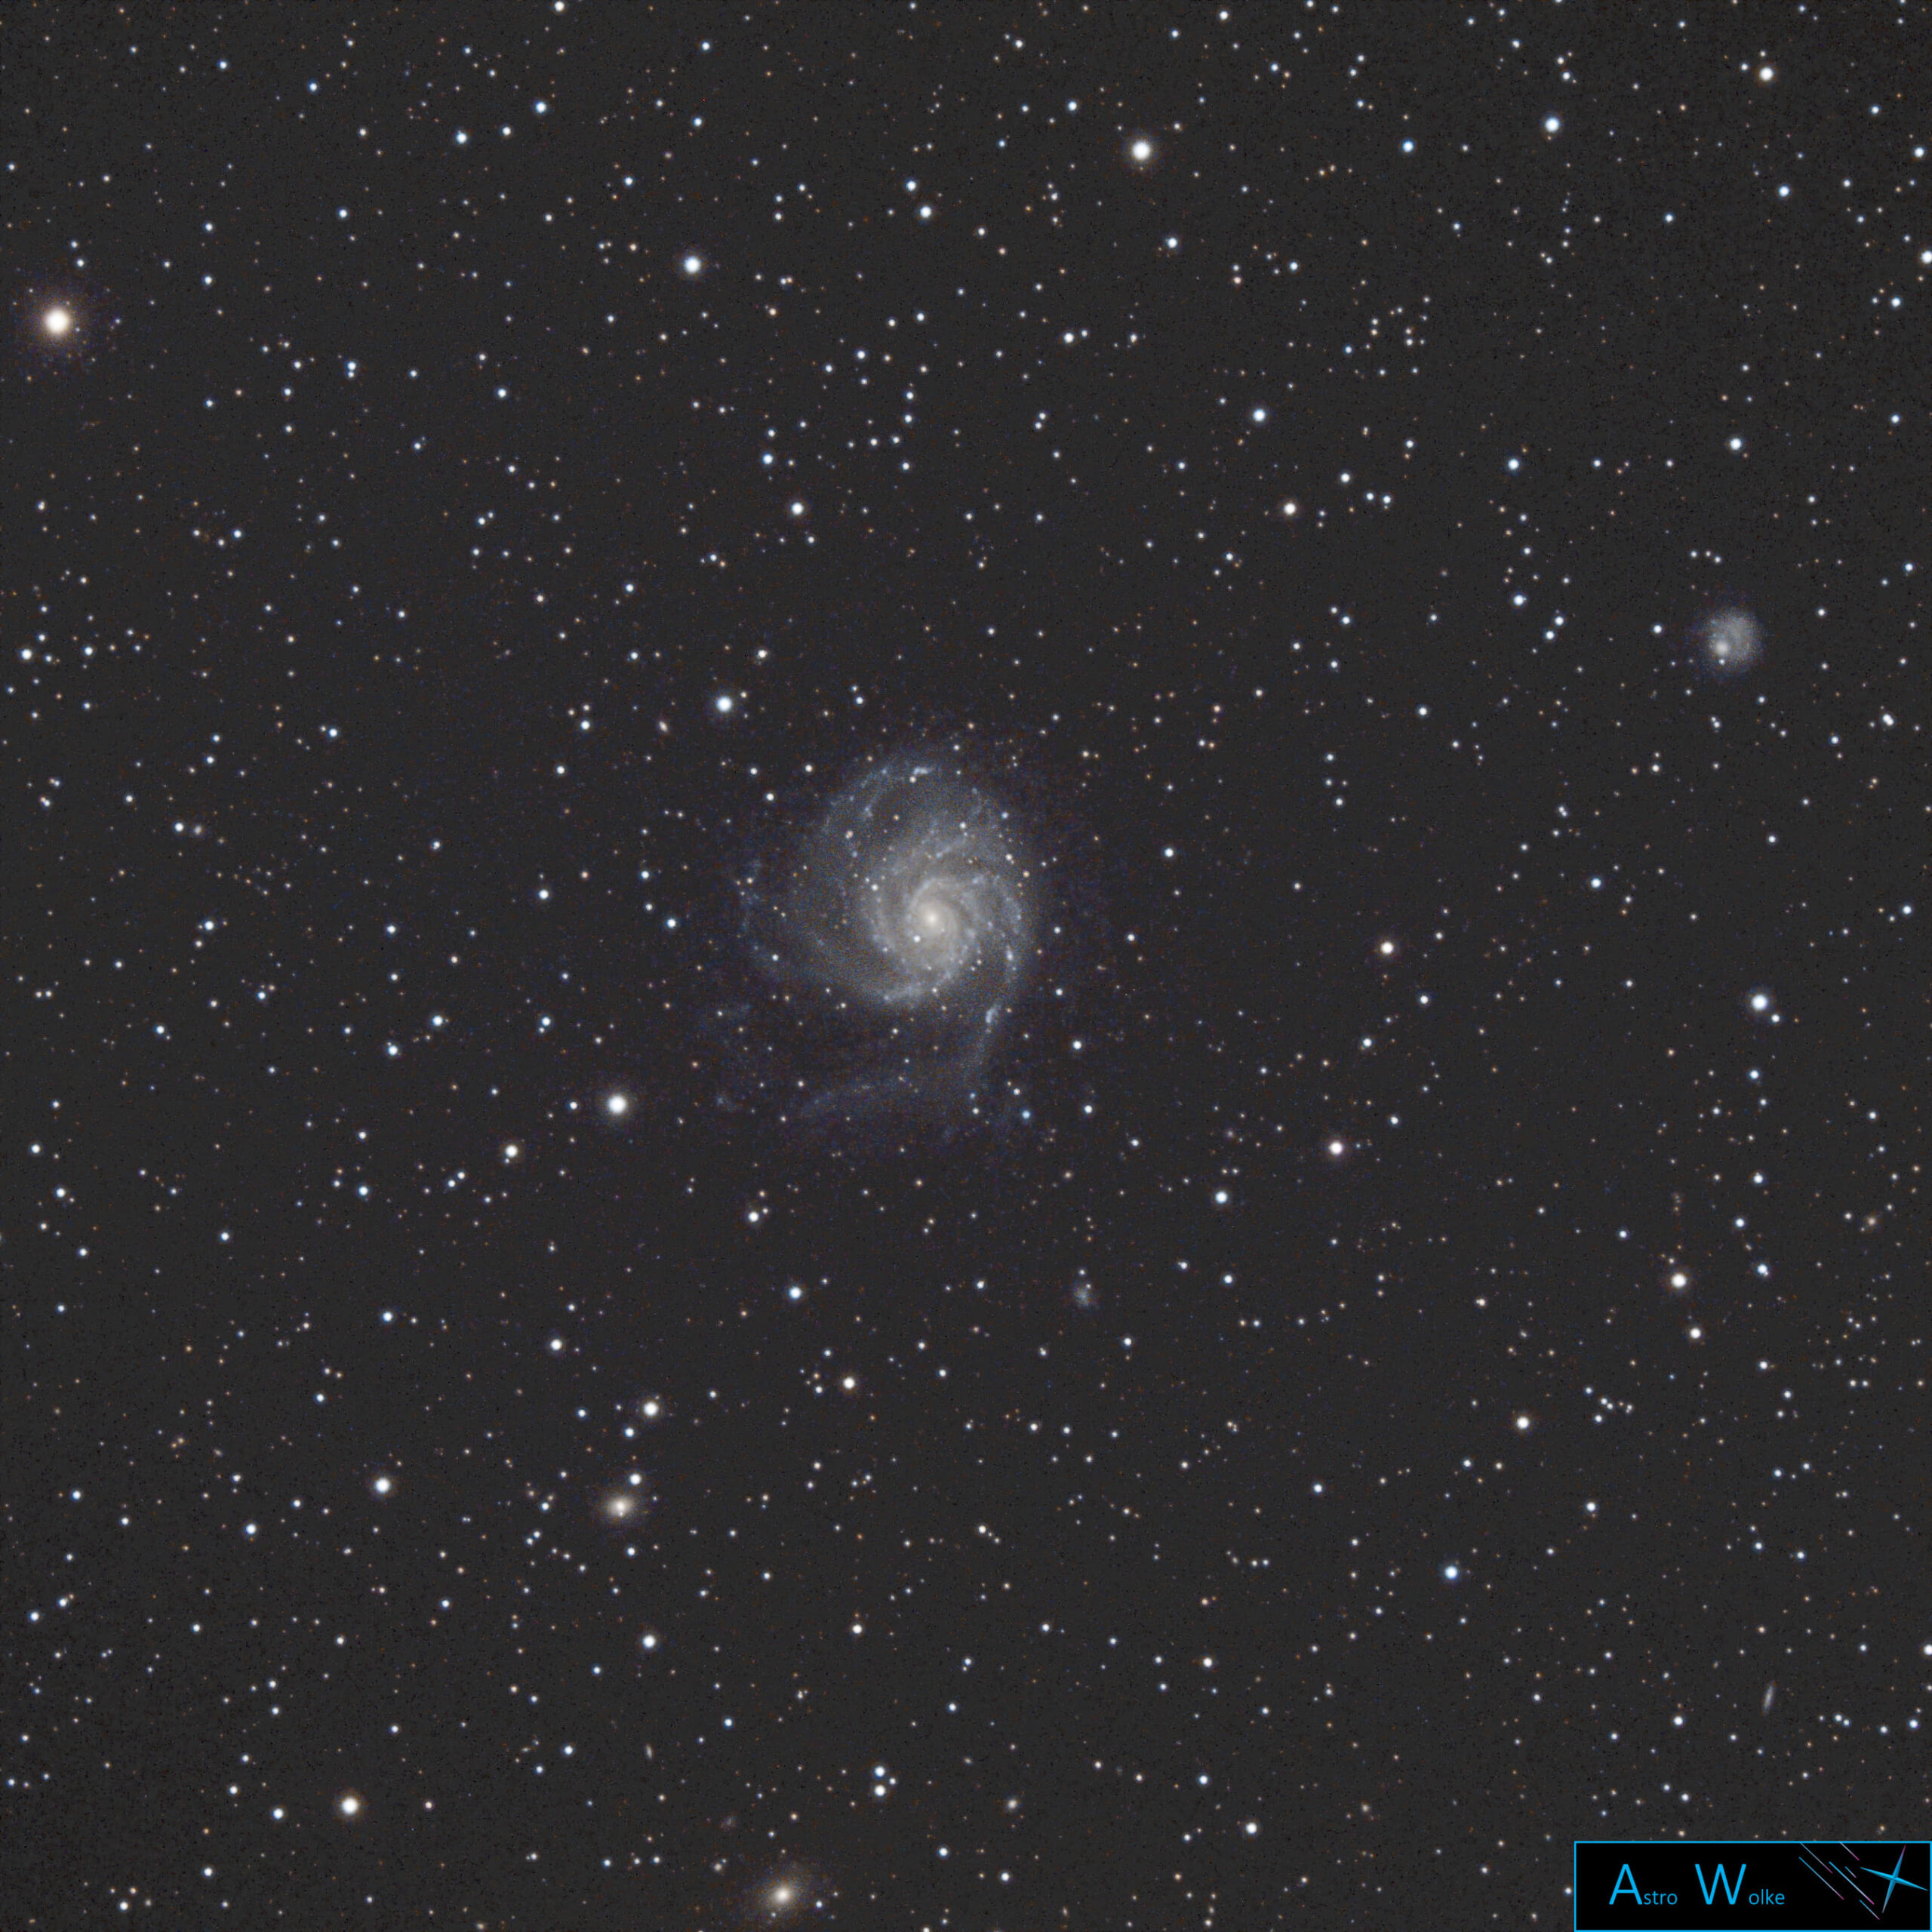 M 101 - Feuerrad Galaxy